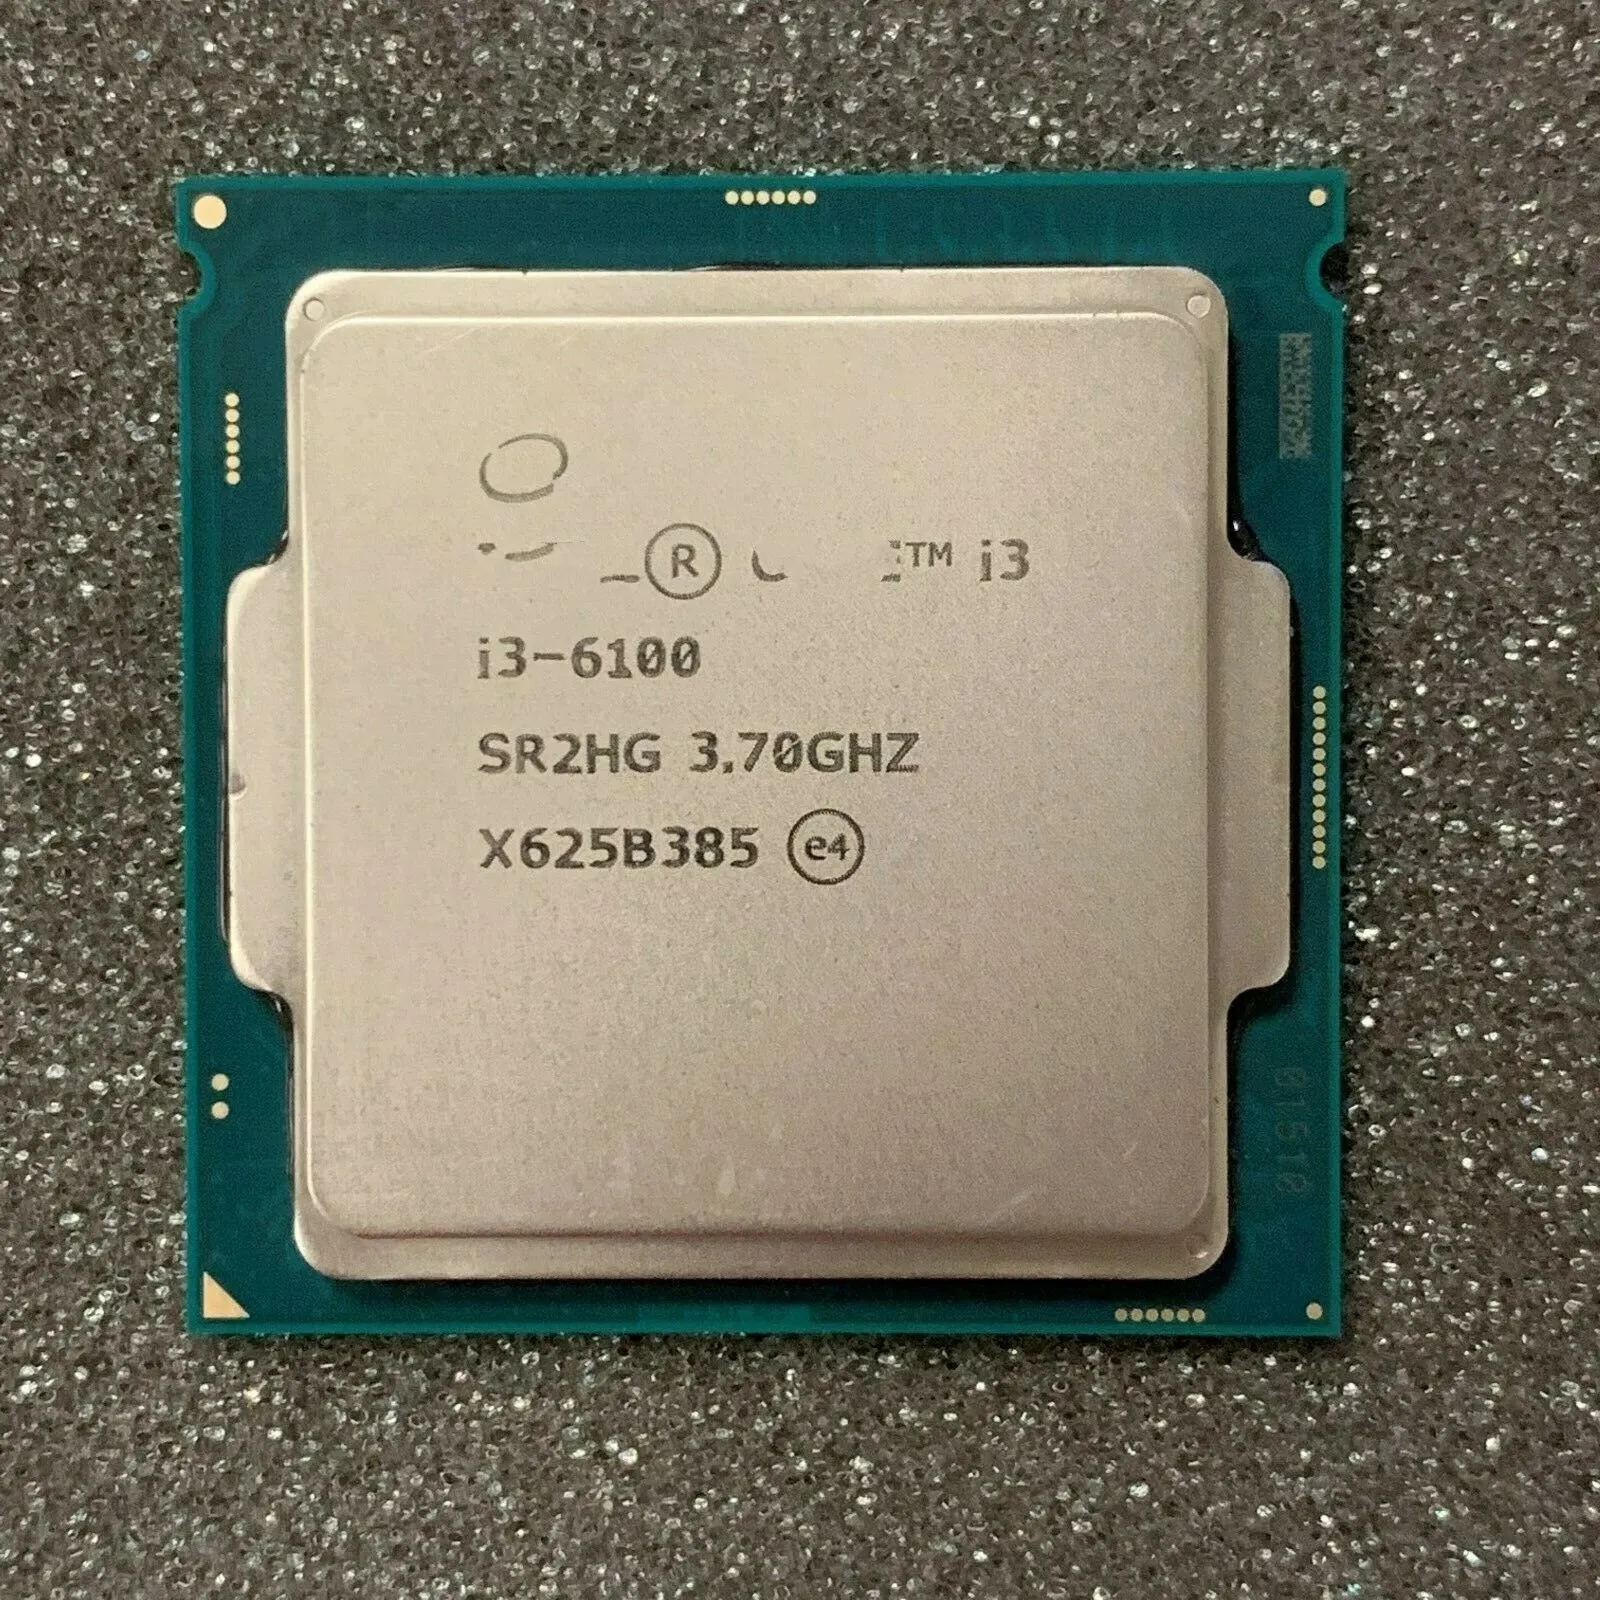 Intel Core I3-6100 I3 6100 3.7 GHz Dual-Core Quad-Thread 51W CPU Processor LGA 1151